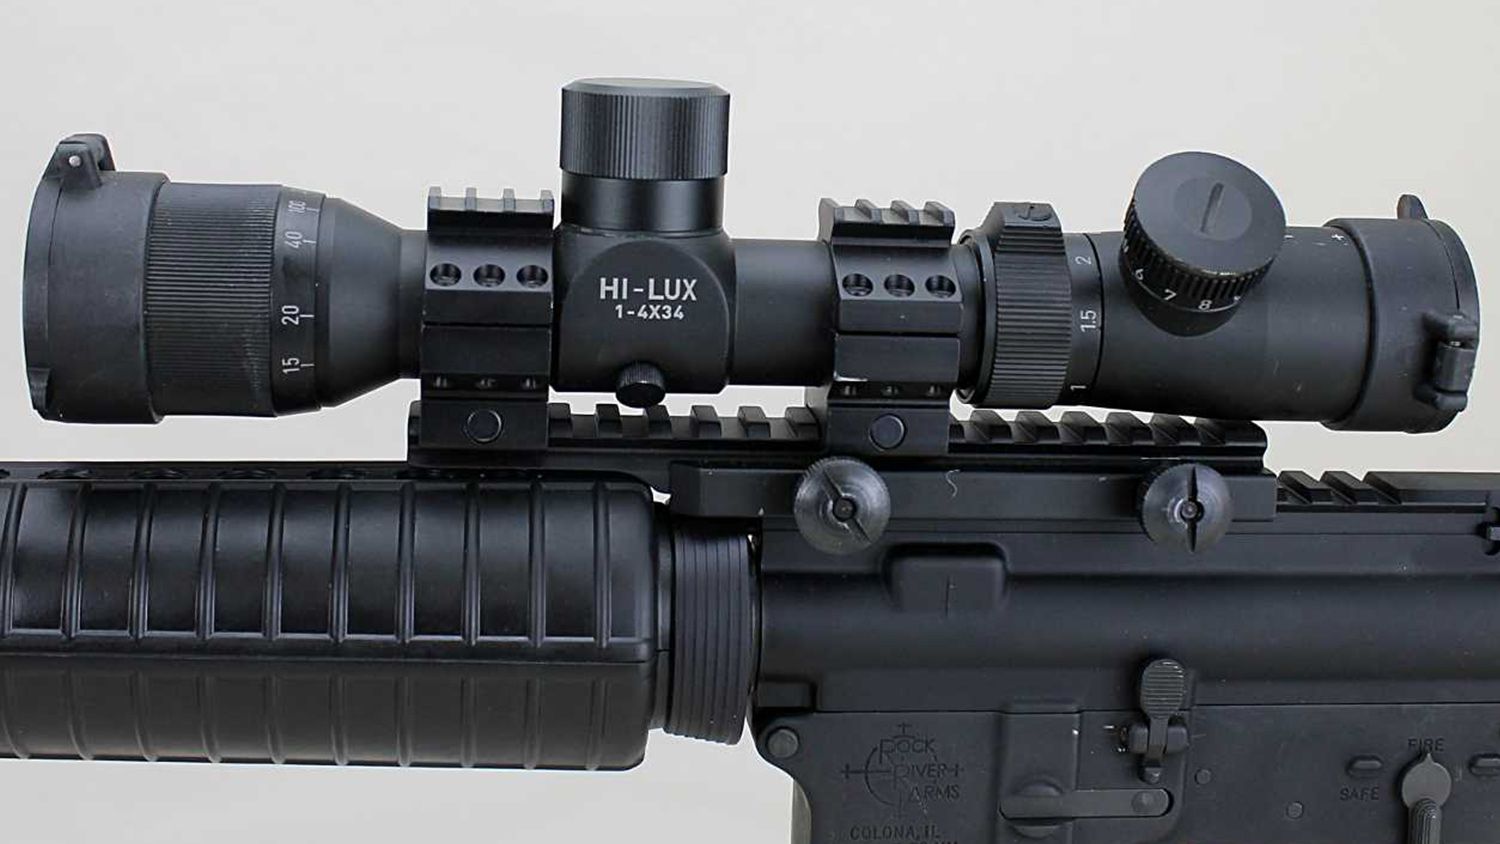 Hi-Lux XTC 1-4x34 mm scope